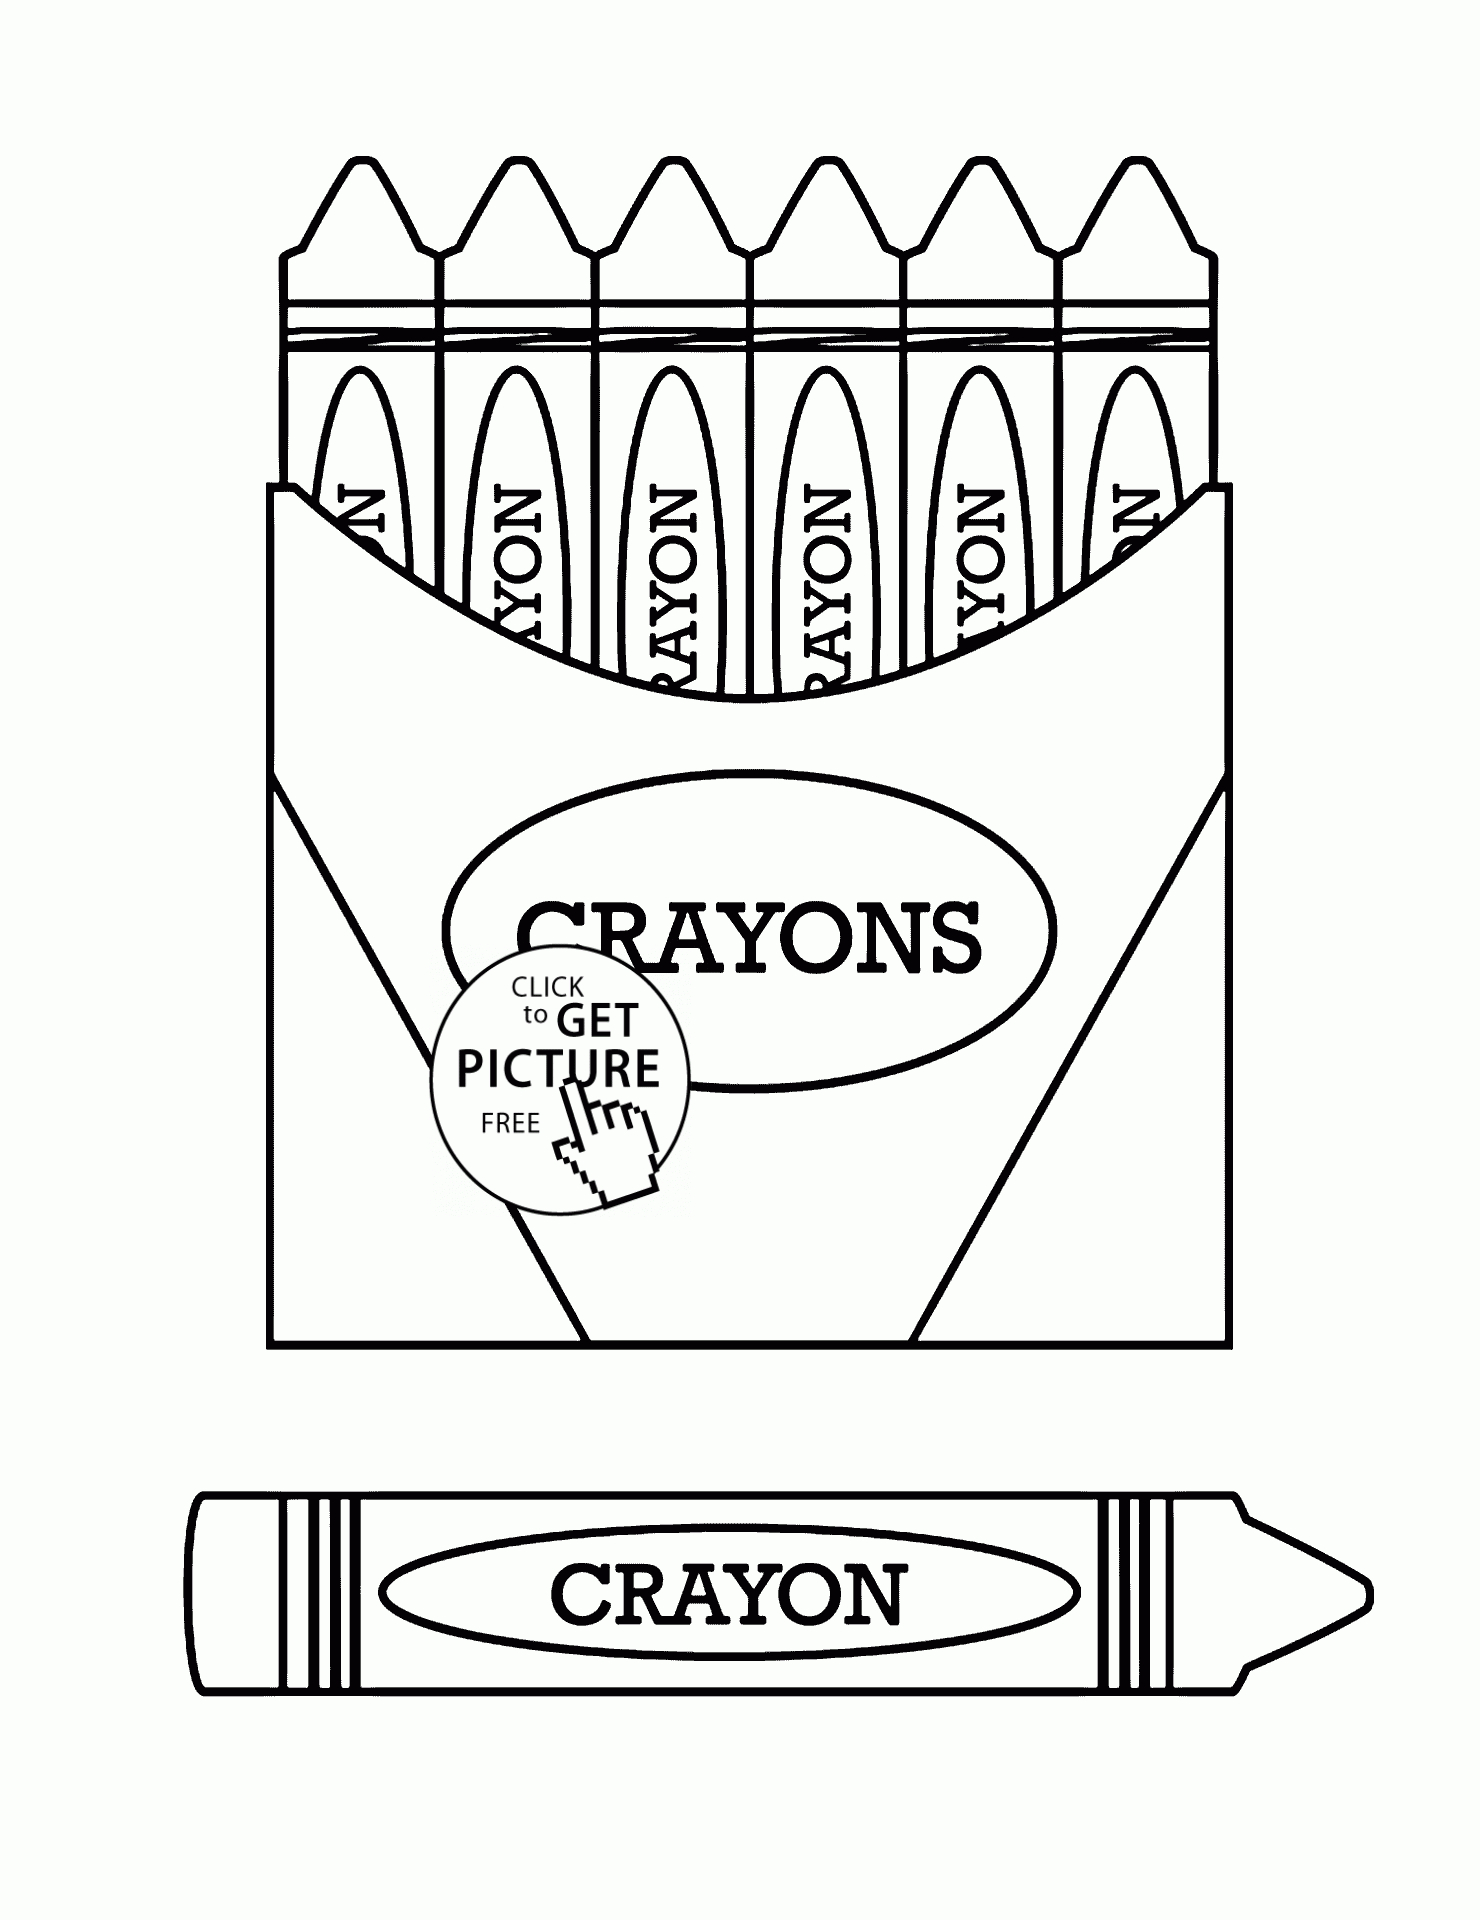 Crayon Coloring Pages To Print. Crayon Coloring Pages To Print - Free Printable Crayon Pattern